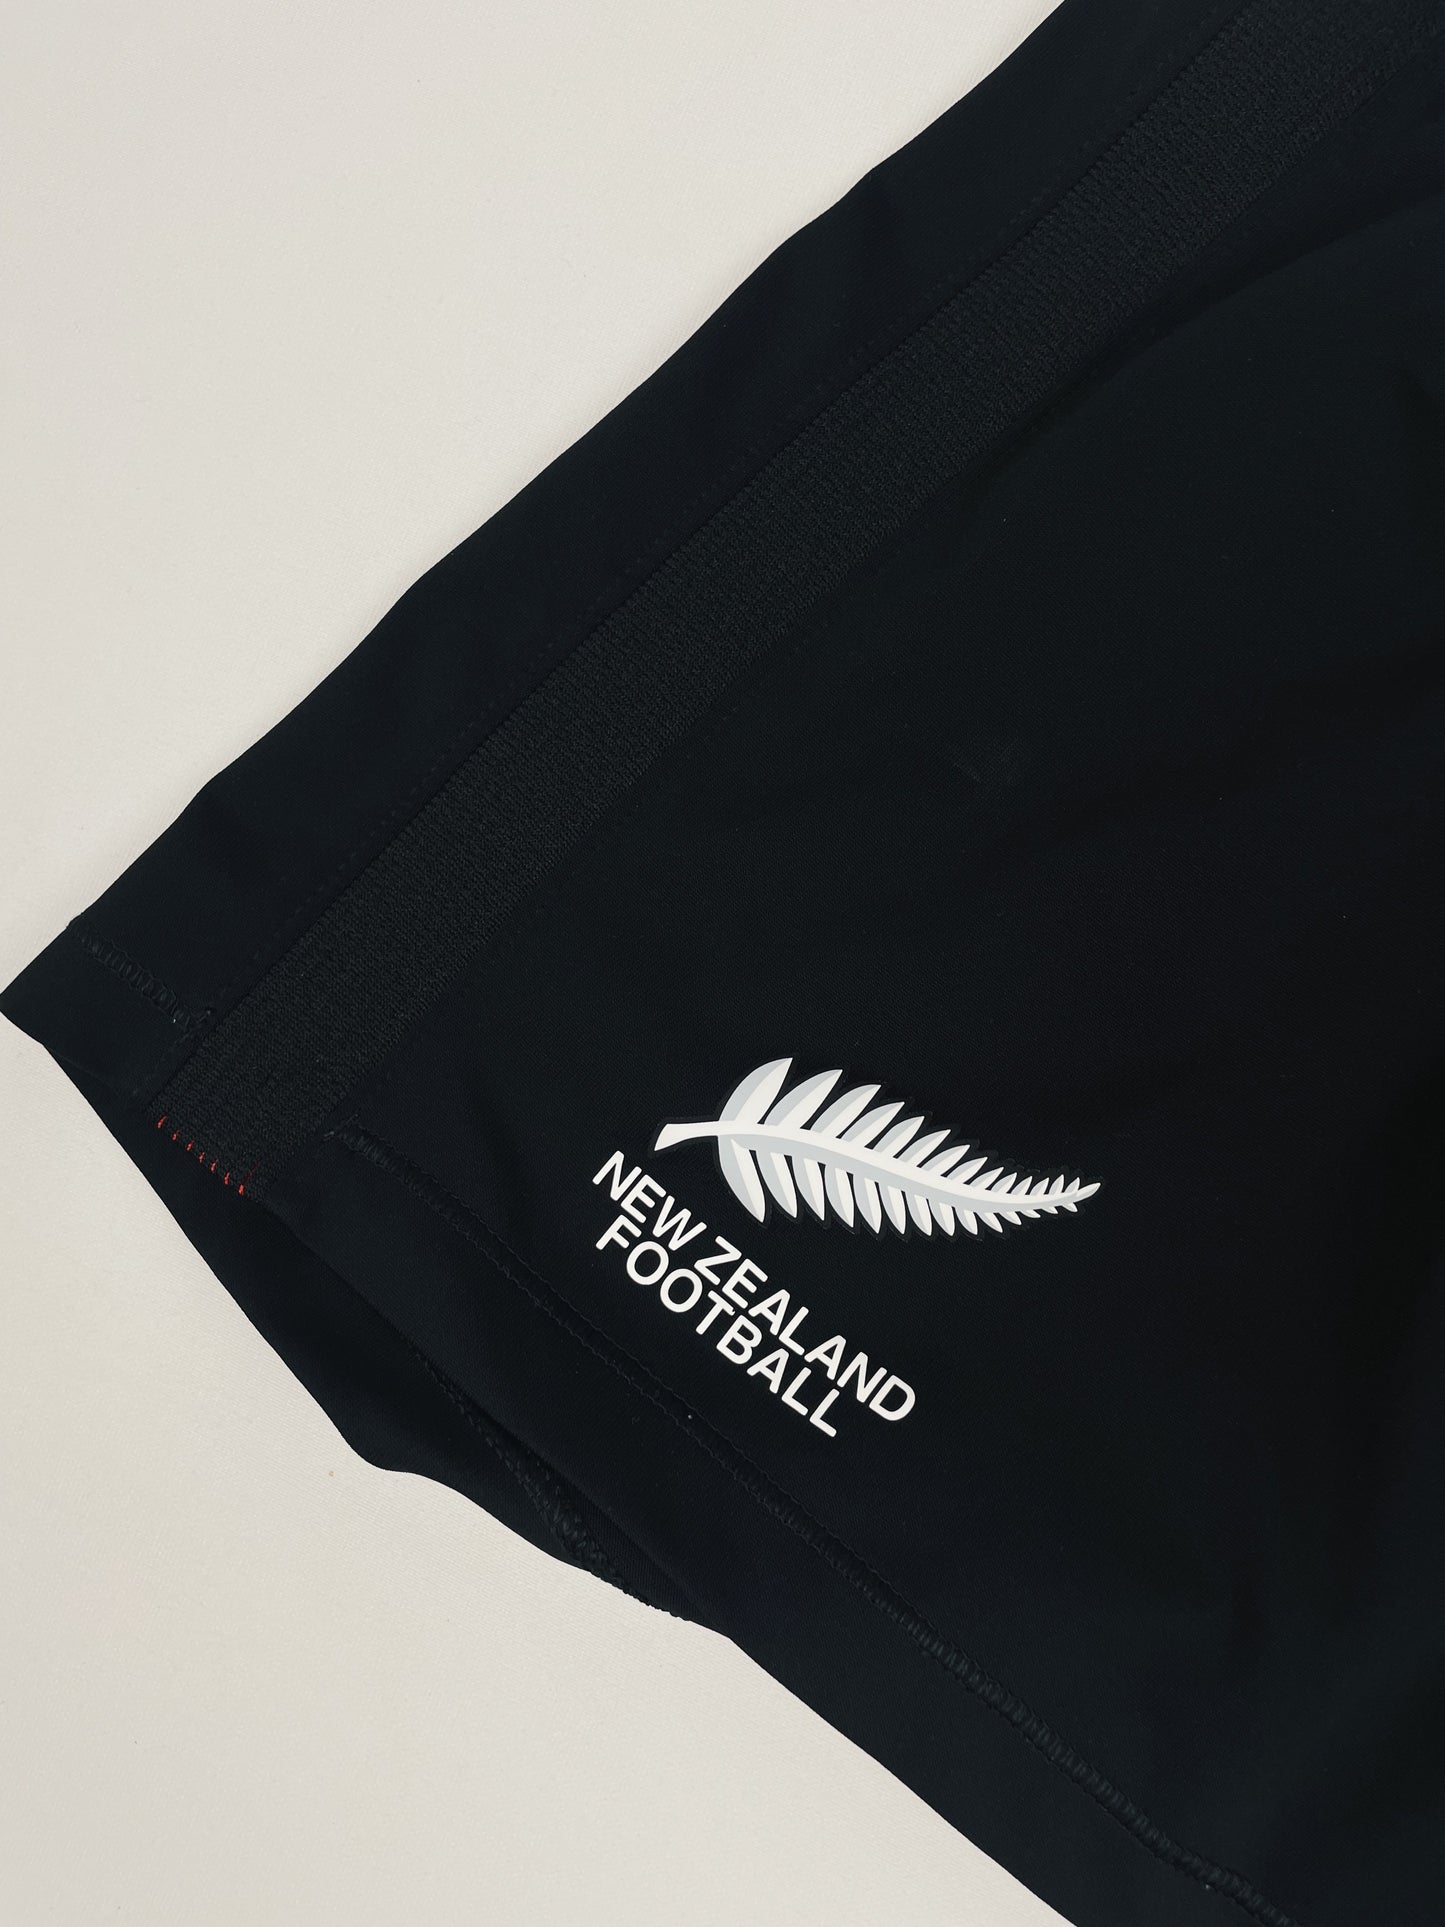 New Zealand Player Shorts (Women's L)